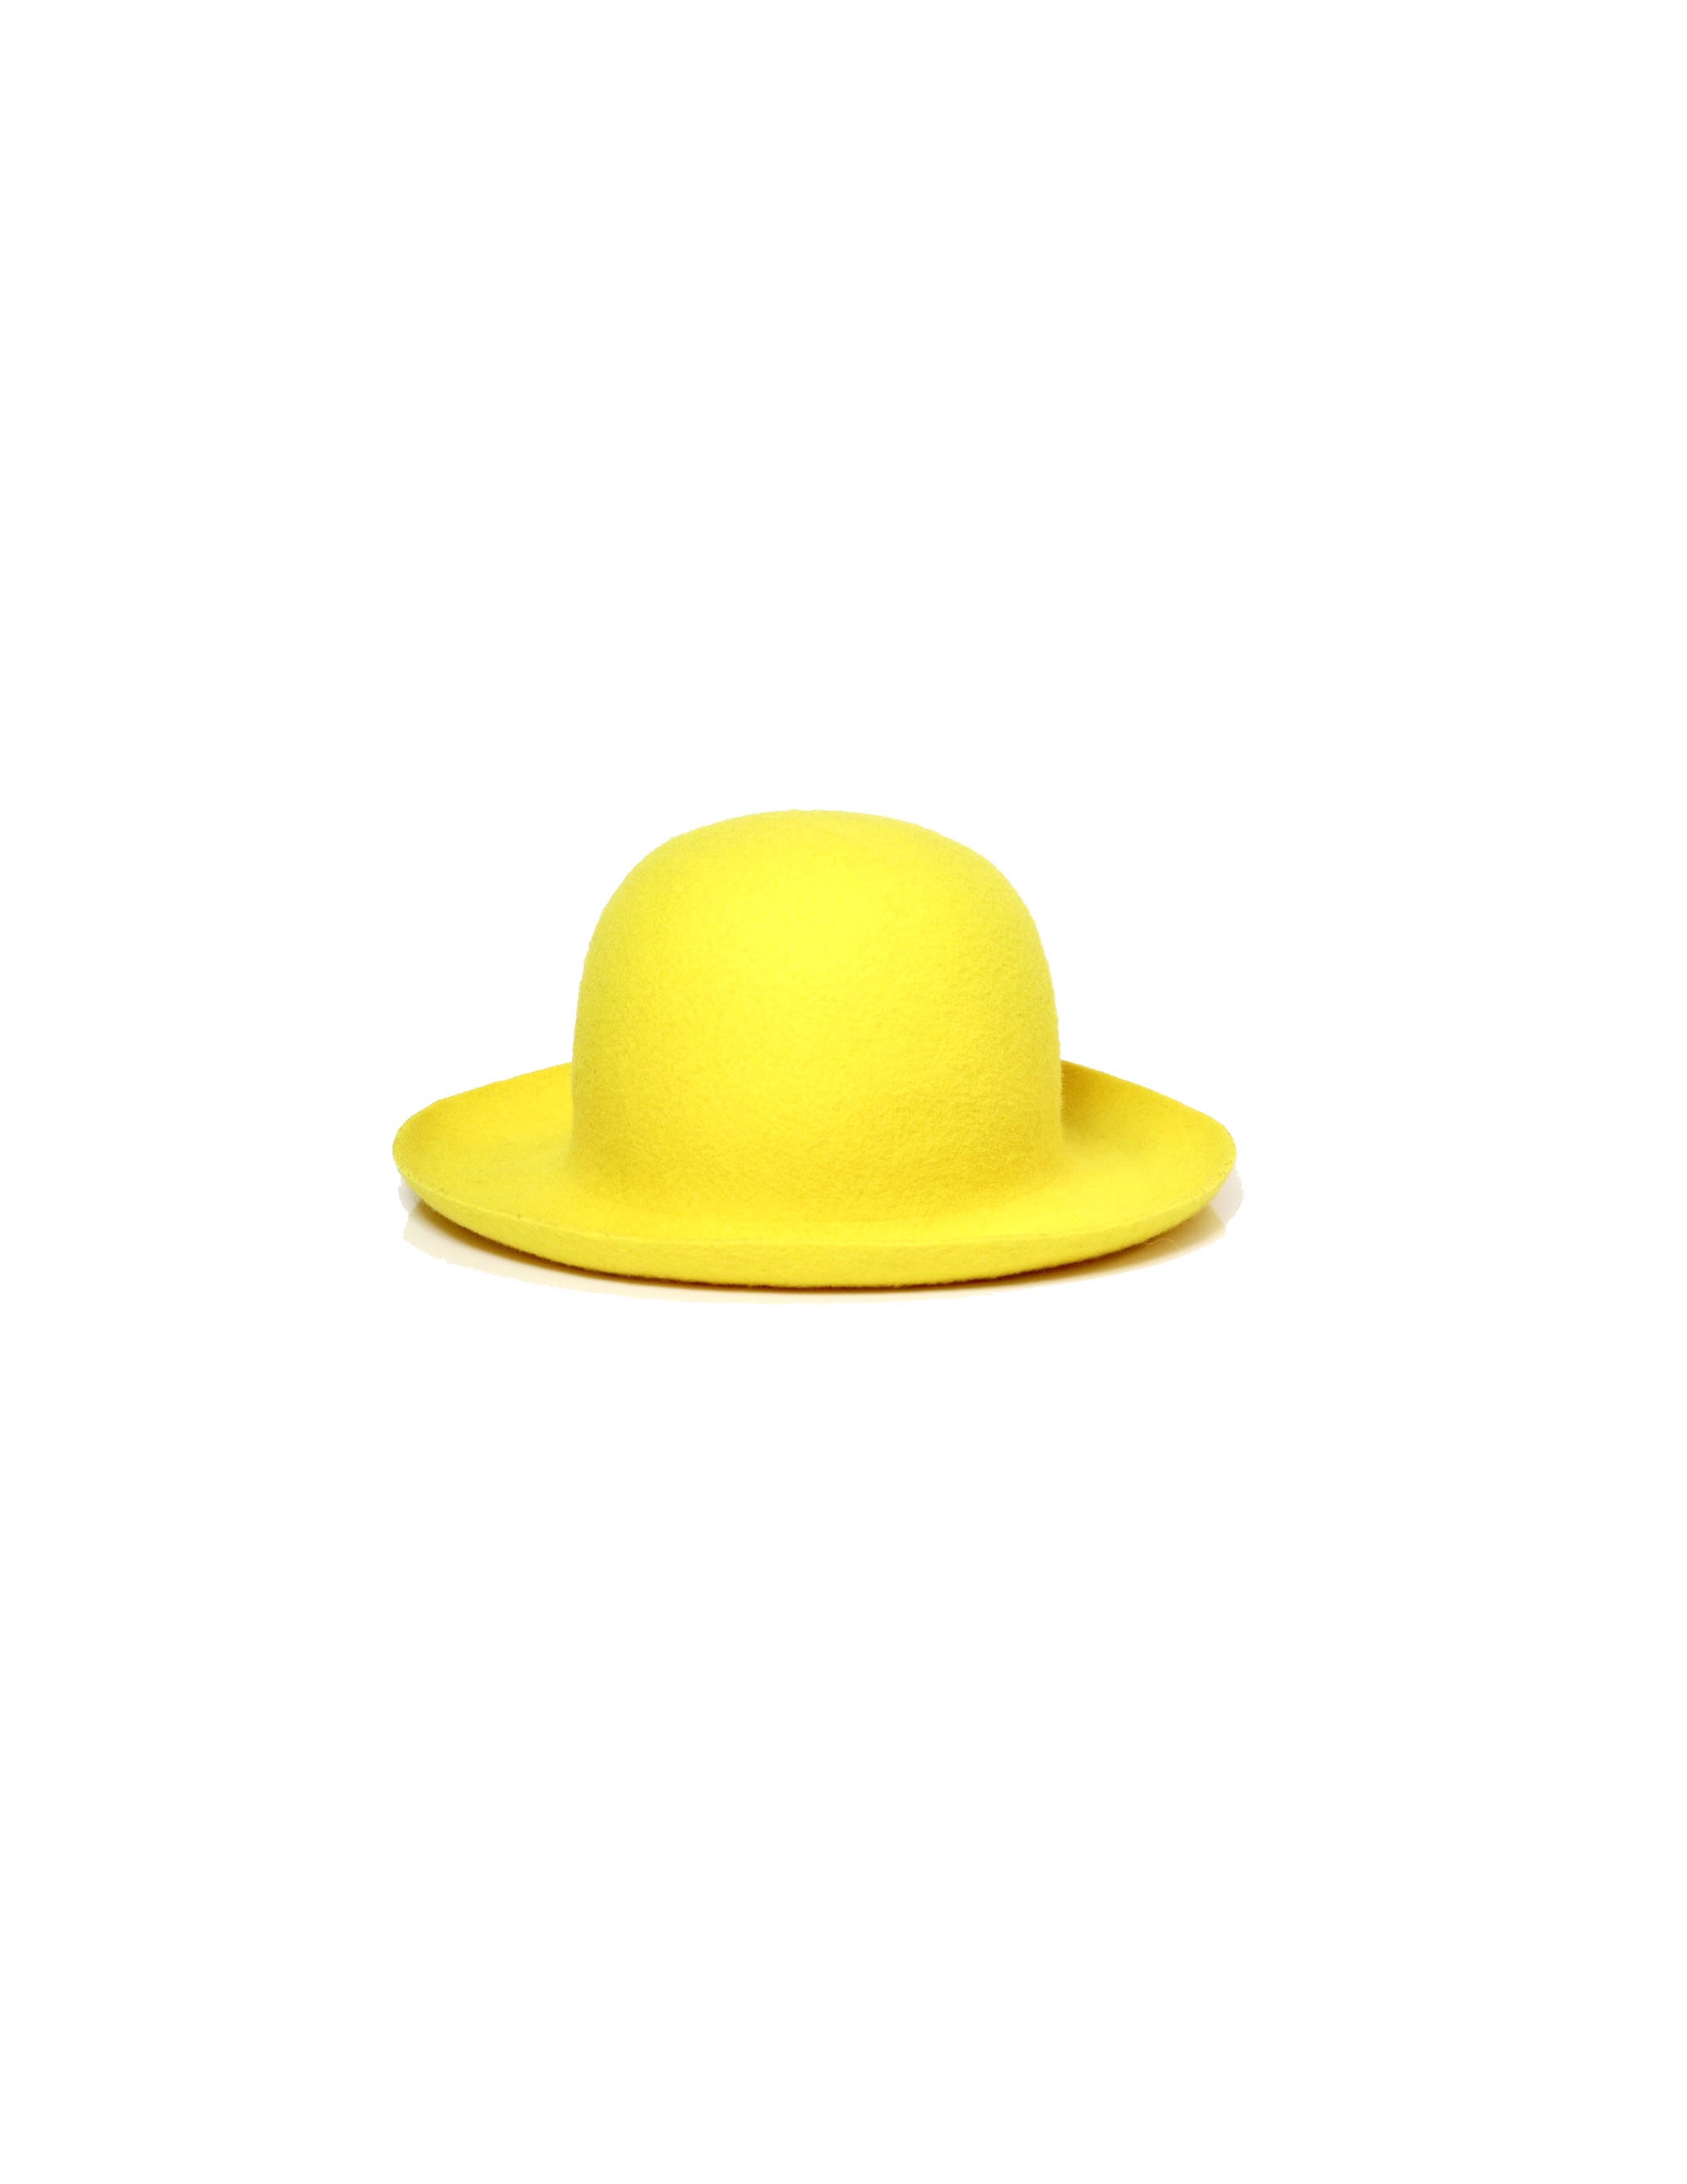 Felt brim hat in yellow color.